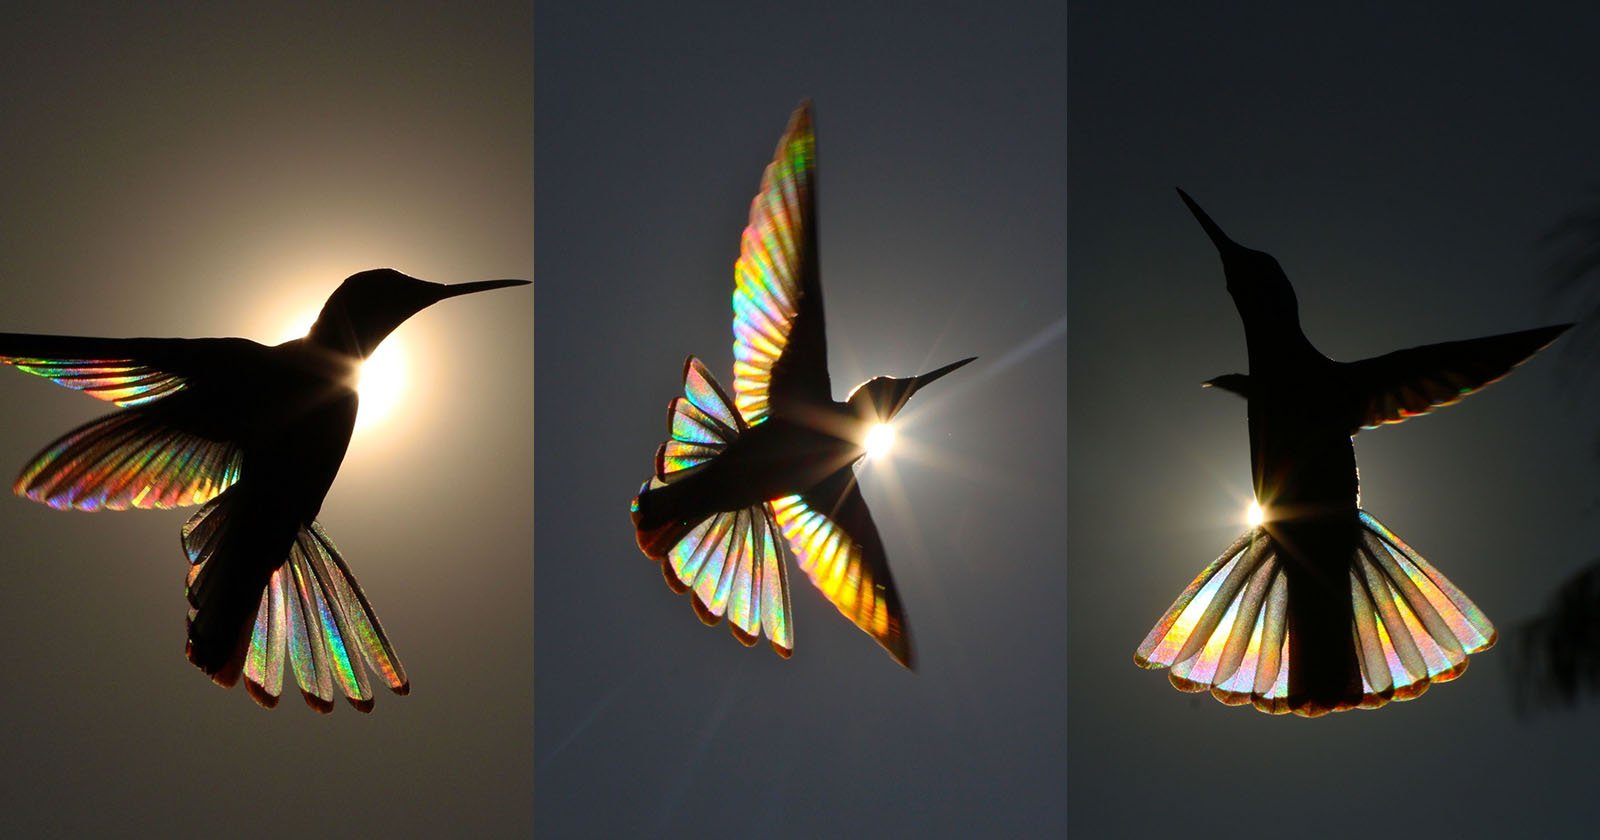  science explains rainbows appear hummingbirds wings 